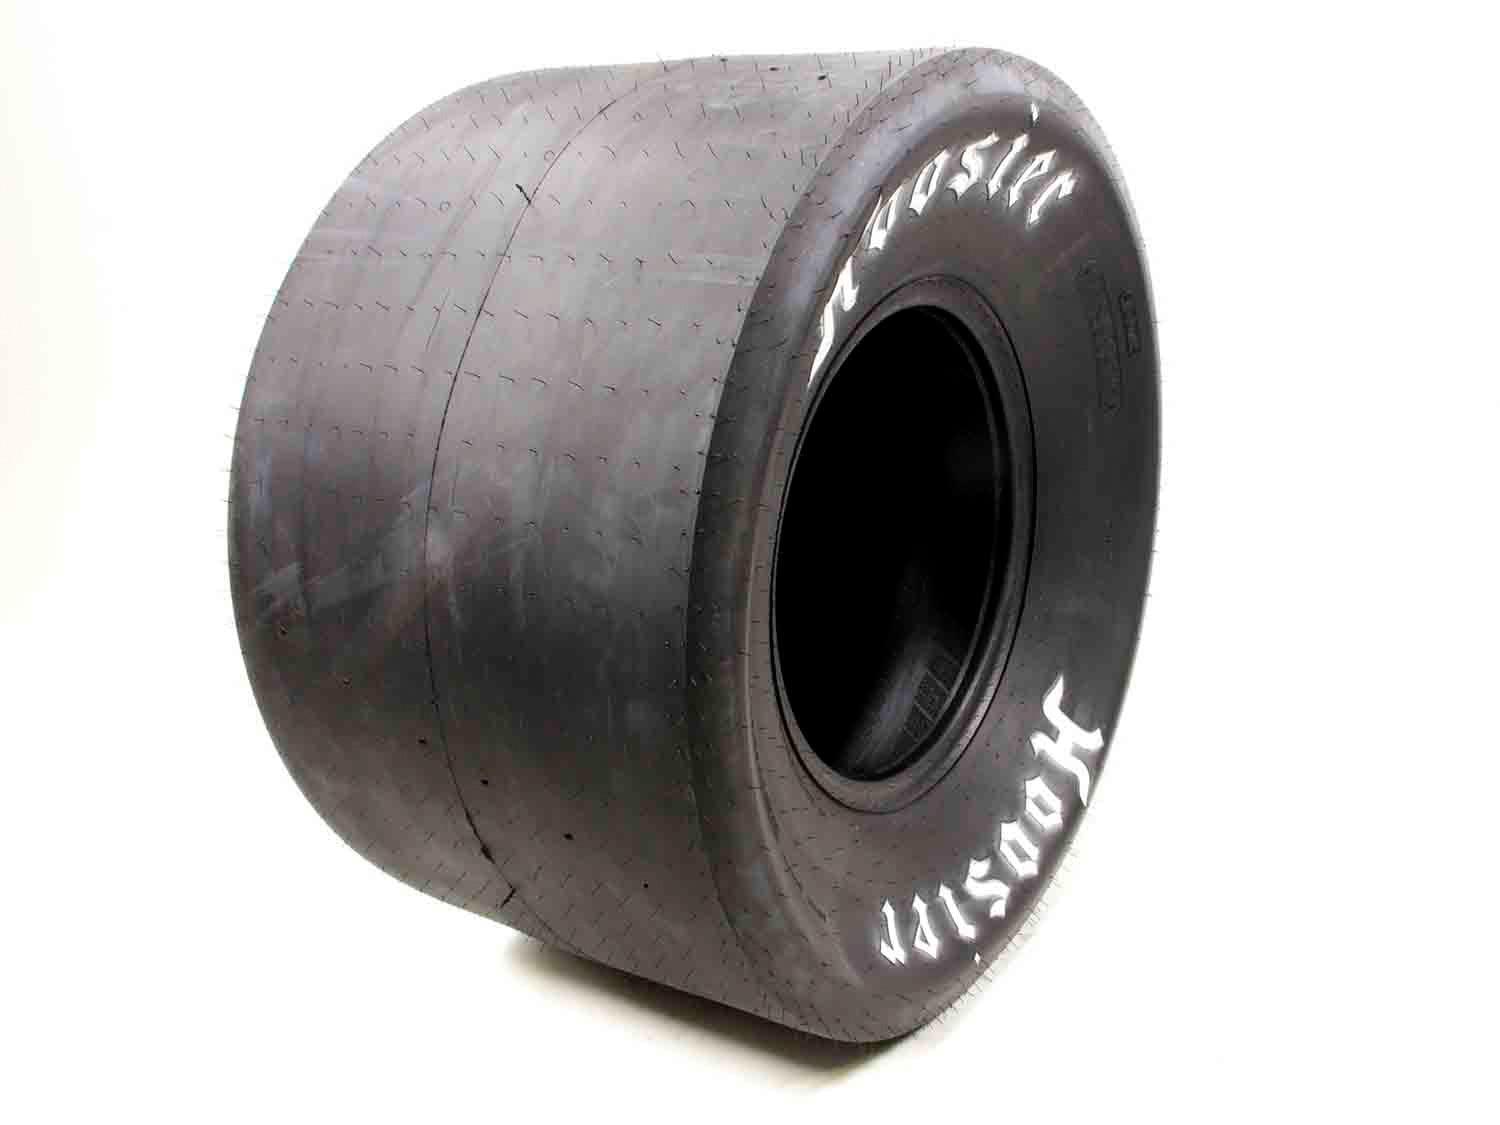 Drag Tire 17/34.5-16 C2055 Compound - Burlile Performance Products